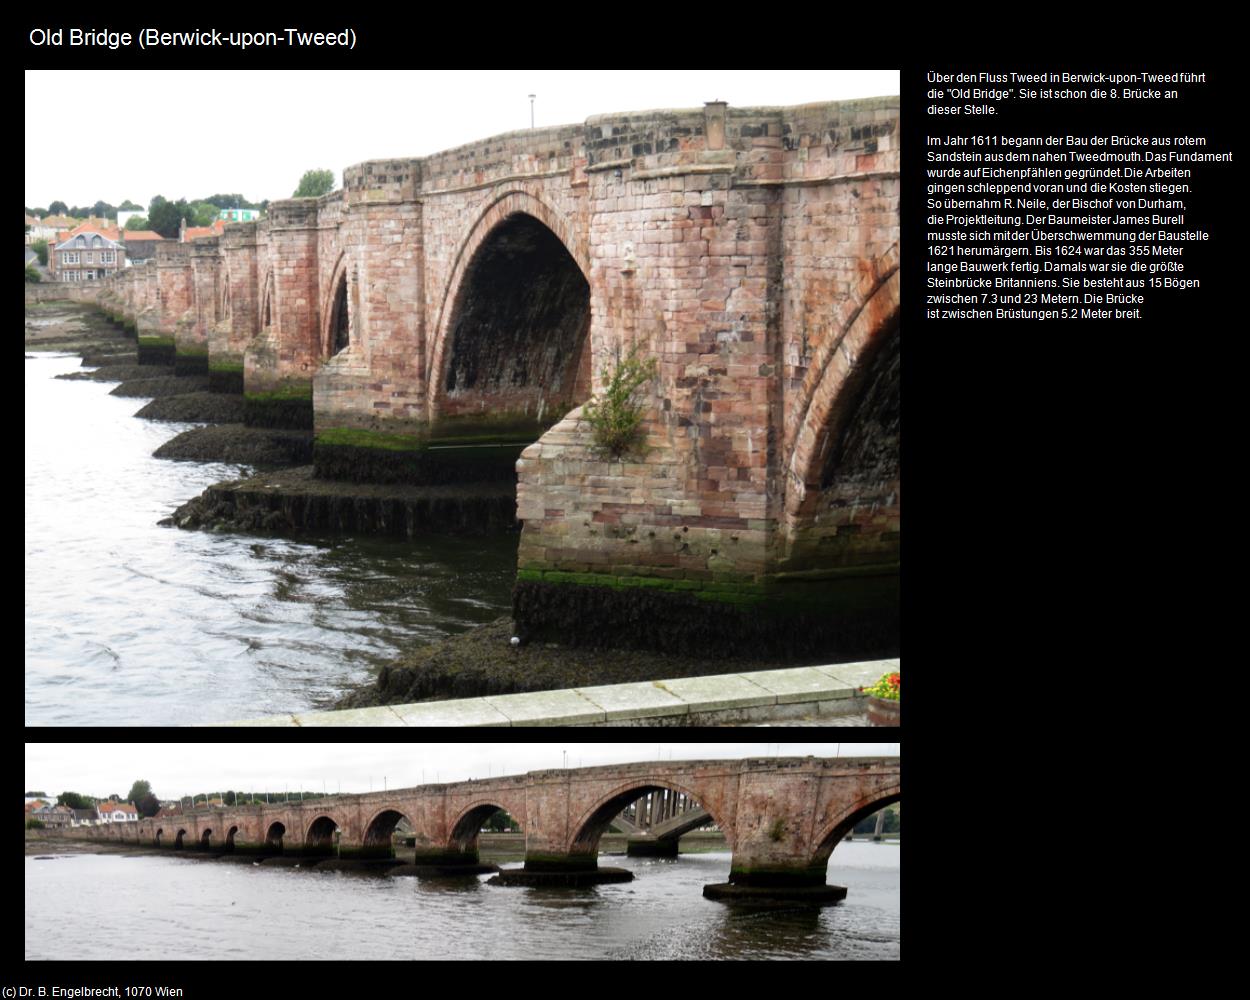 Old Bridge (Berwick-upon-Tweed, England) in Kulturatlas-ENGLAND und WALES